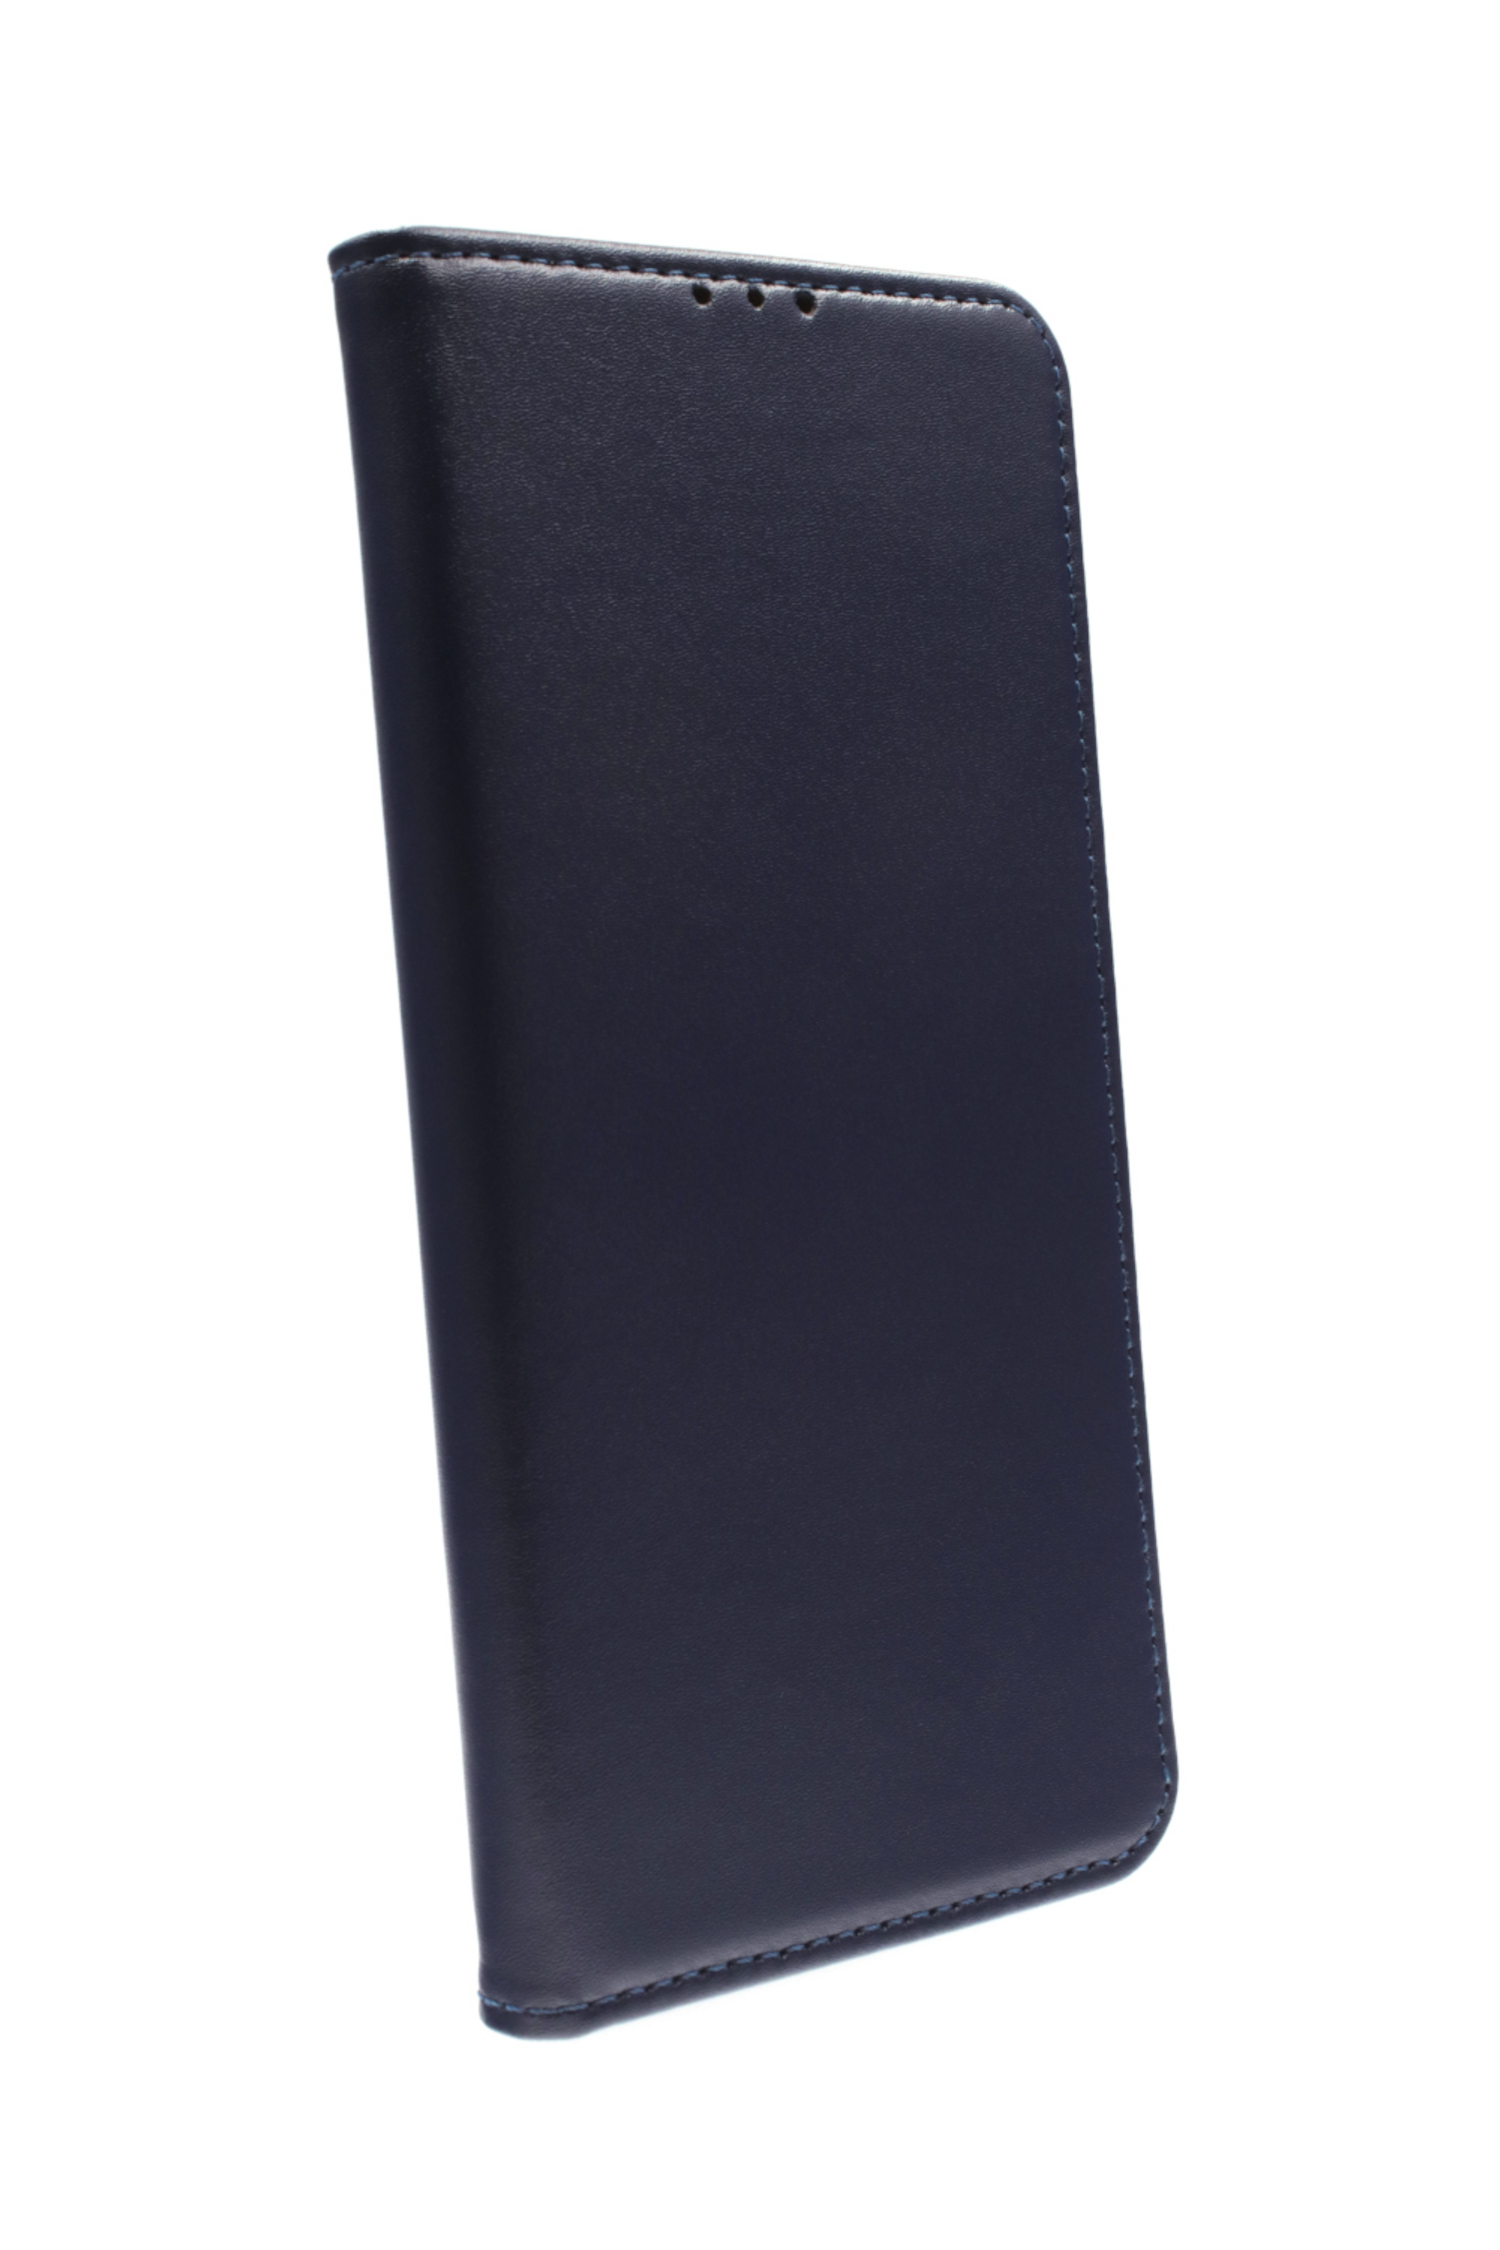 JAMCOVER Echt Leder S20, Bookcase, Galaxy Samsung, Marineblau Bookcover